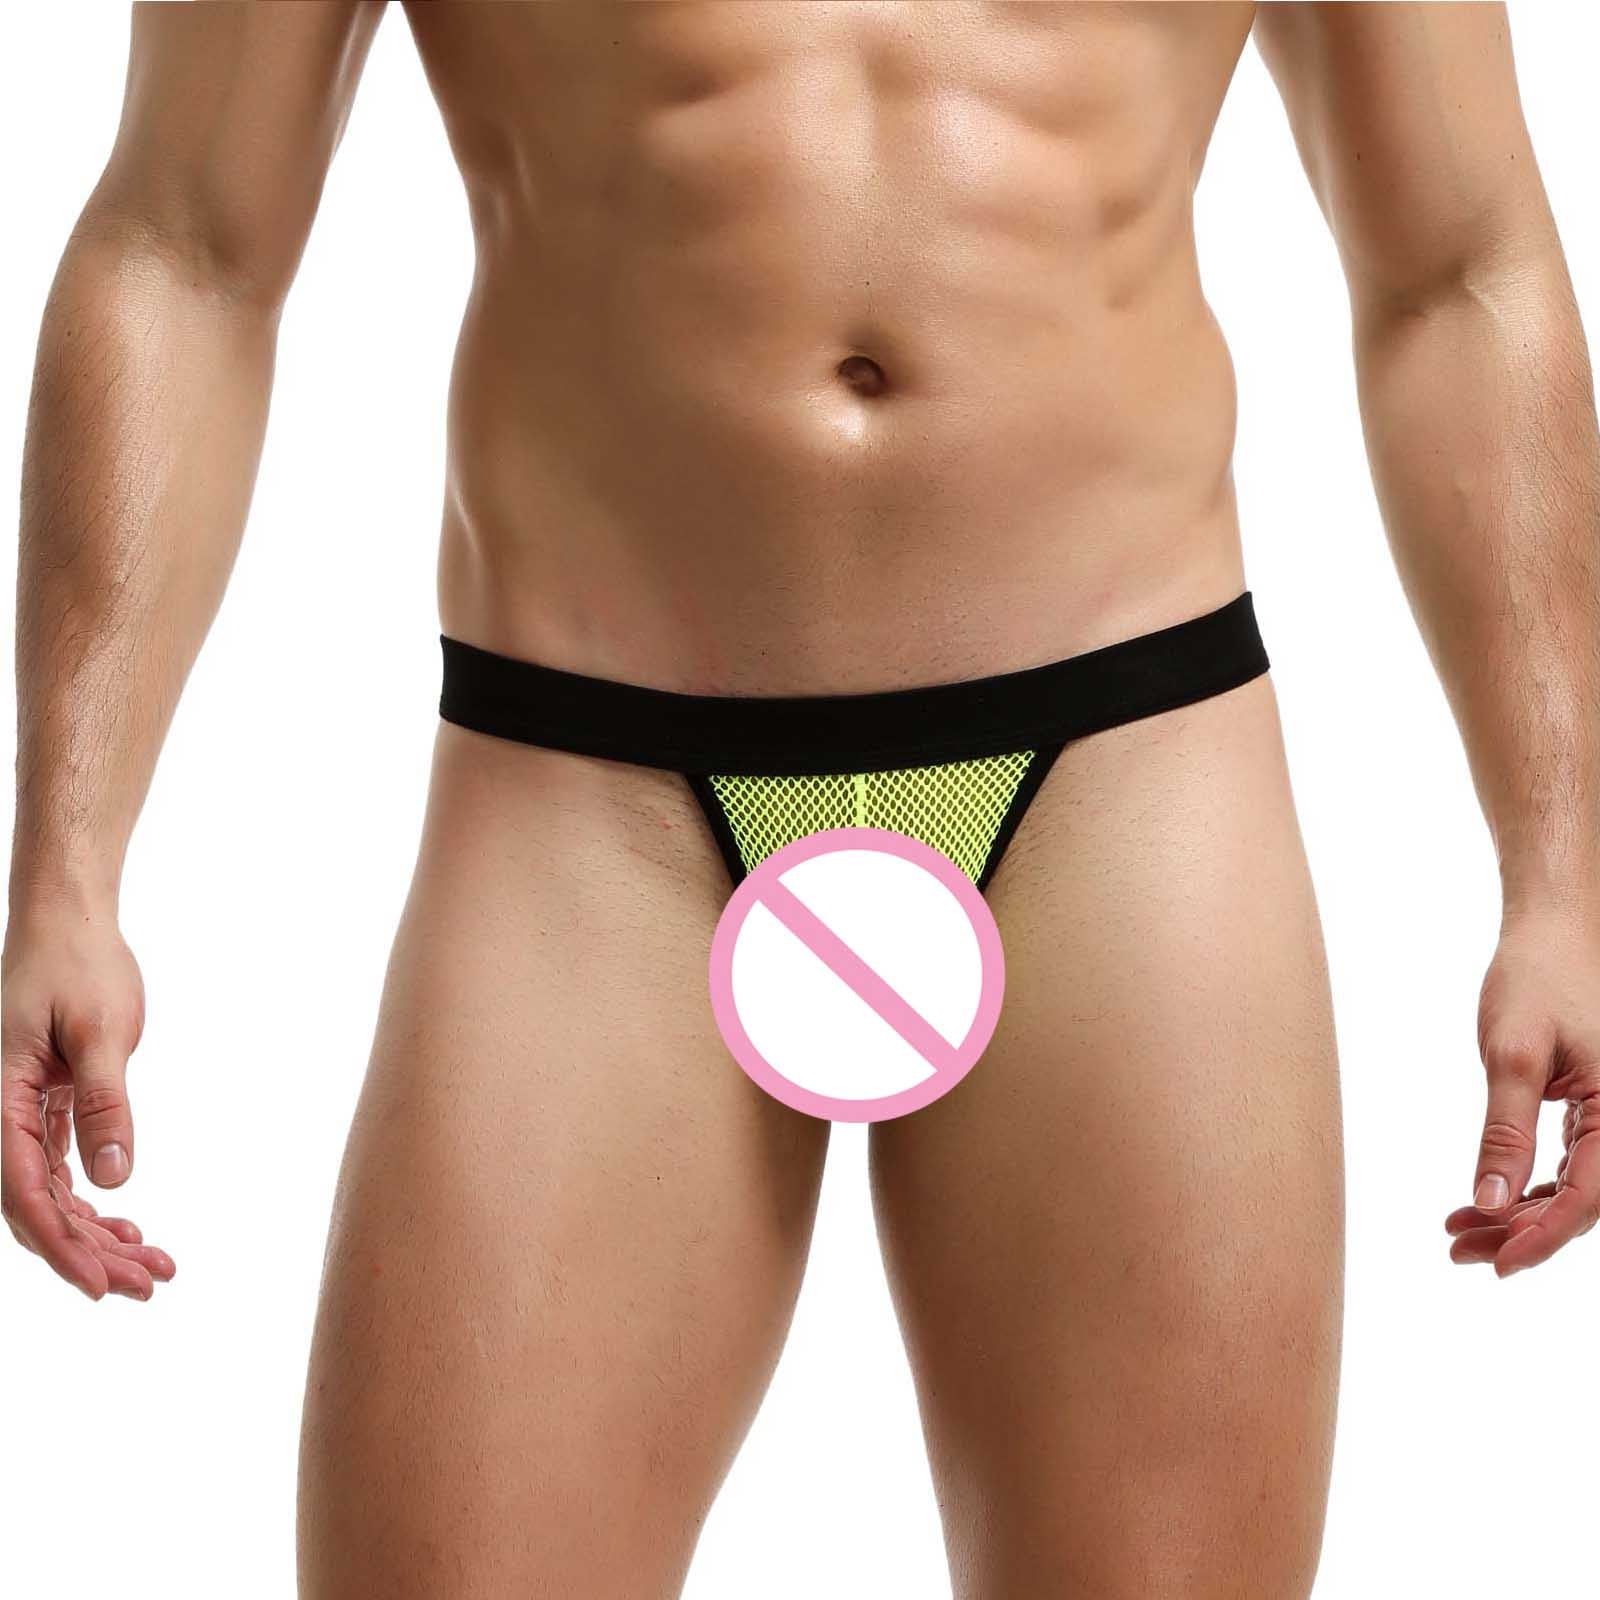 Baocc Mens Thong Men's Sexy Jockstrap Breathable Underwear Mesh